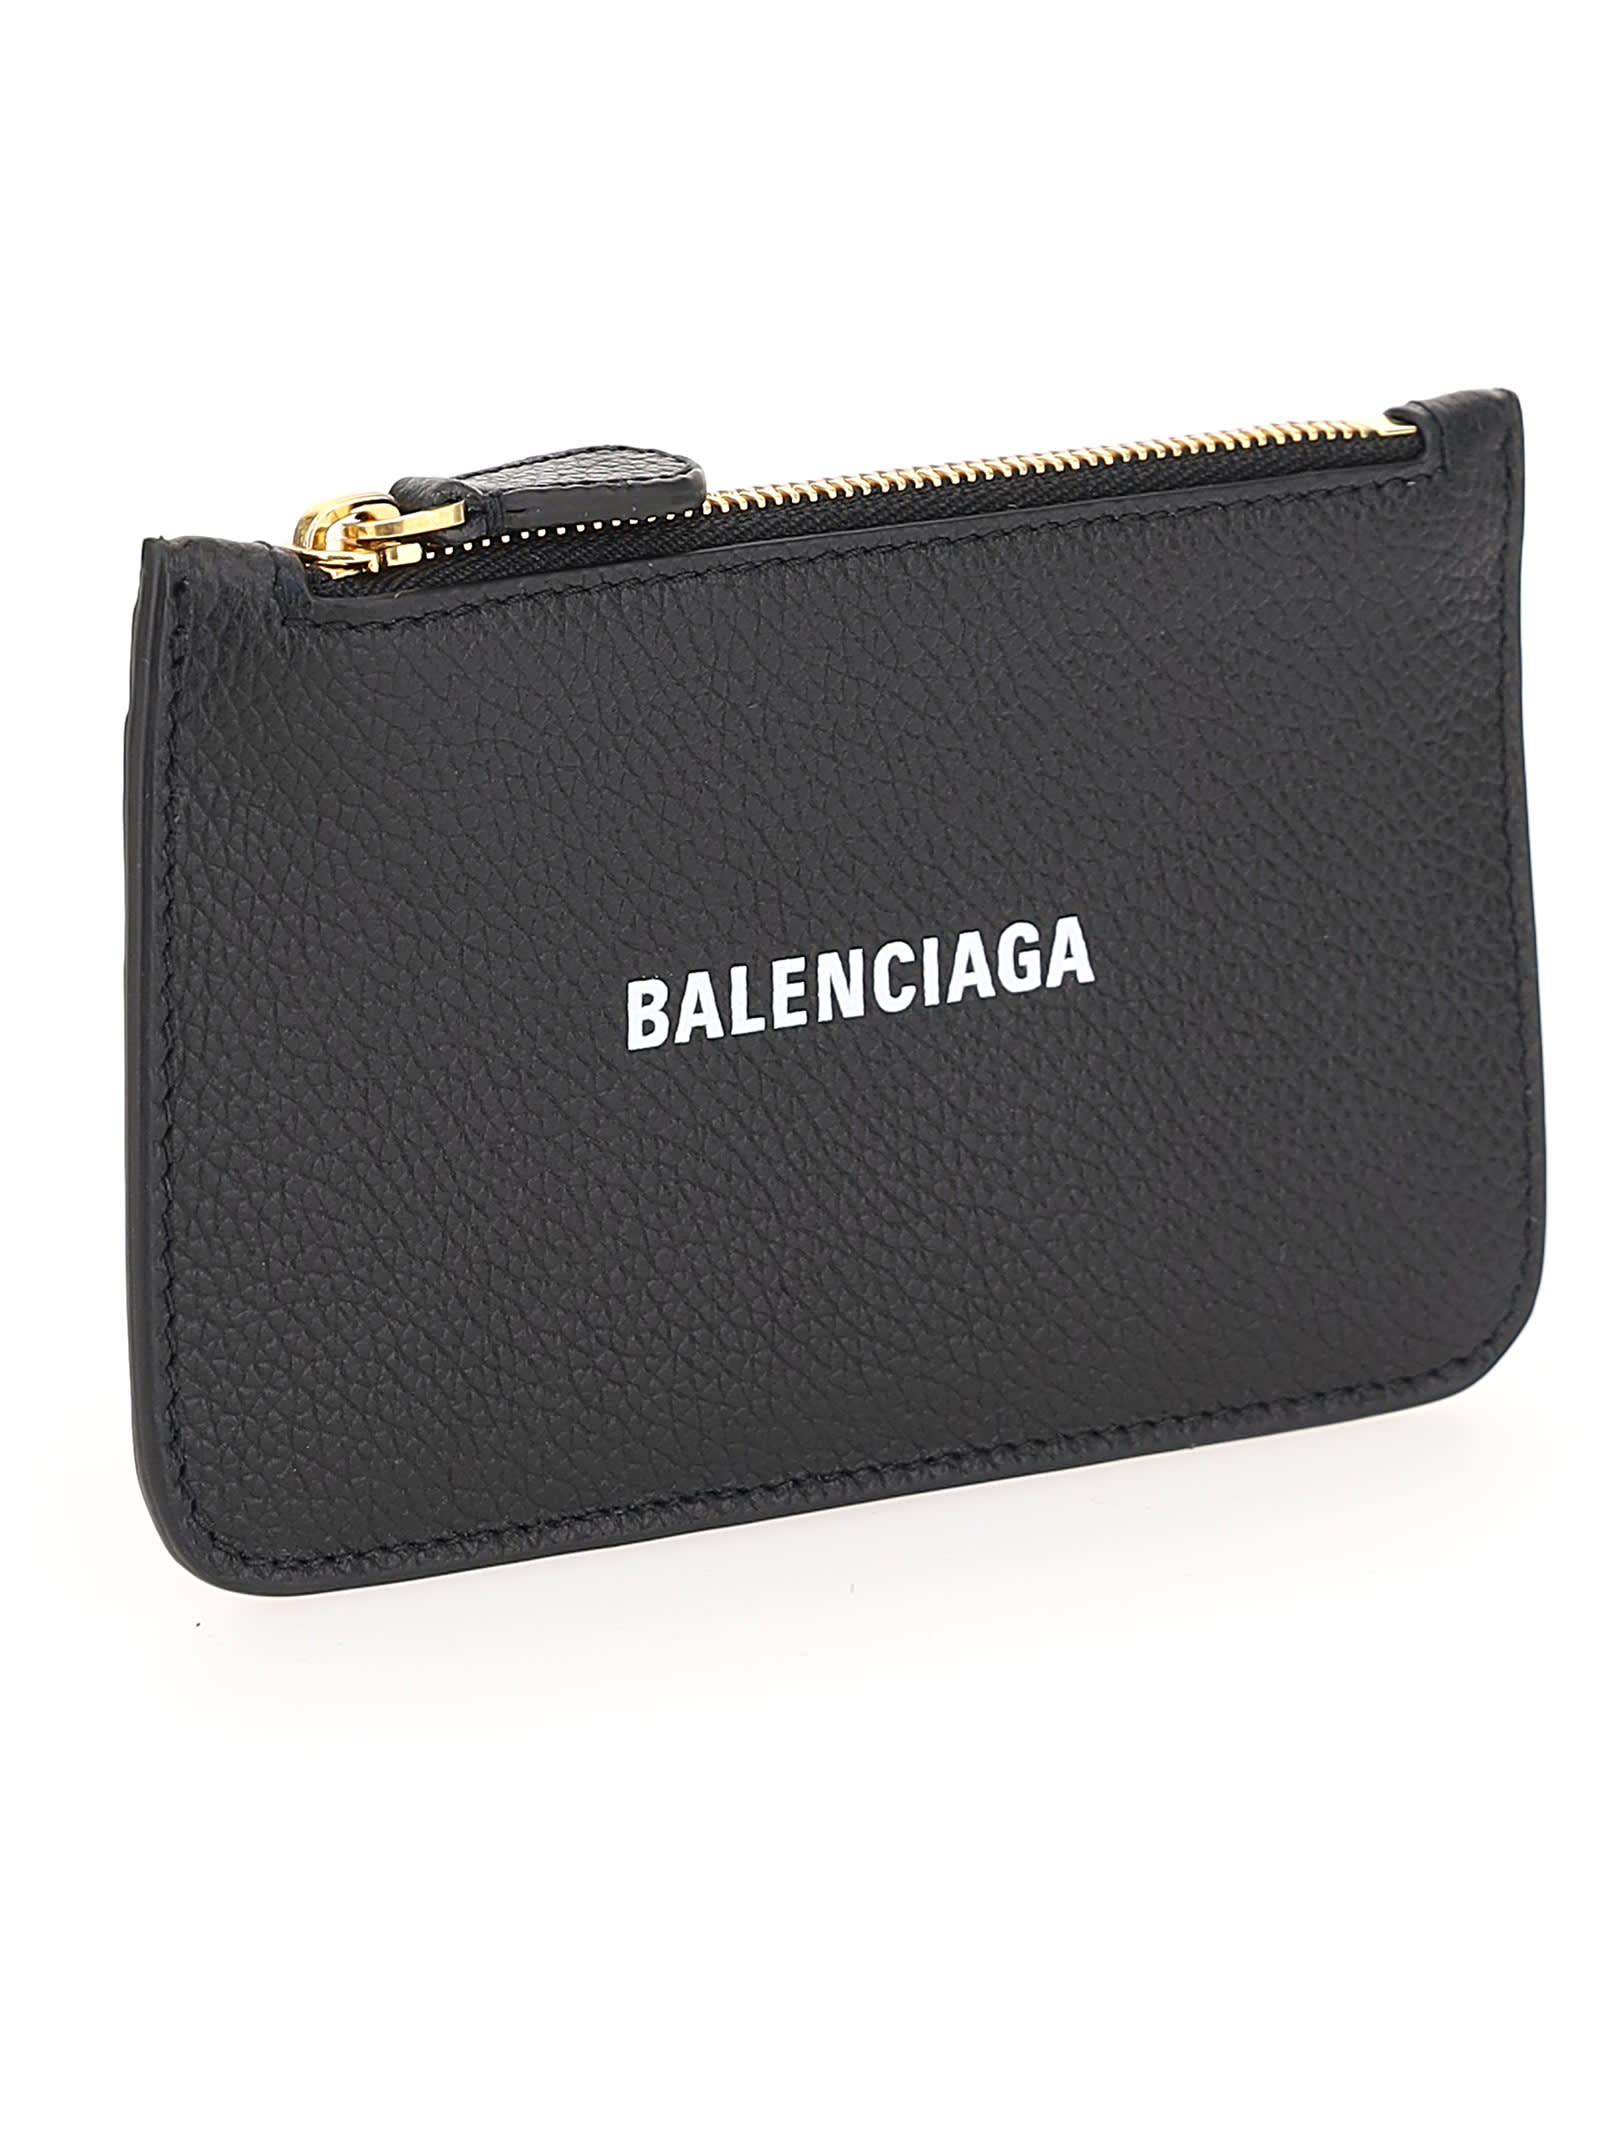 Balenciaga Wallets | italist, ALWAYS LIKE A SALE